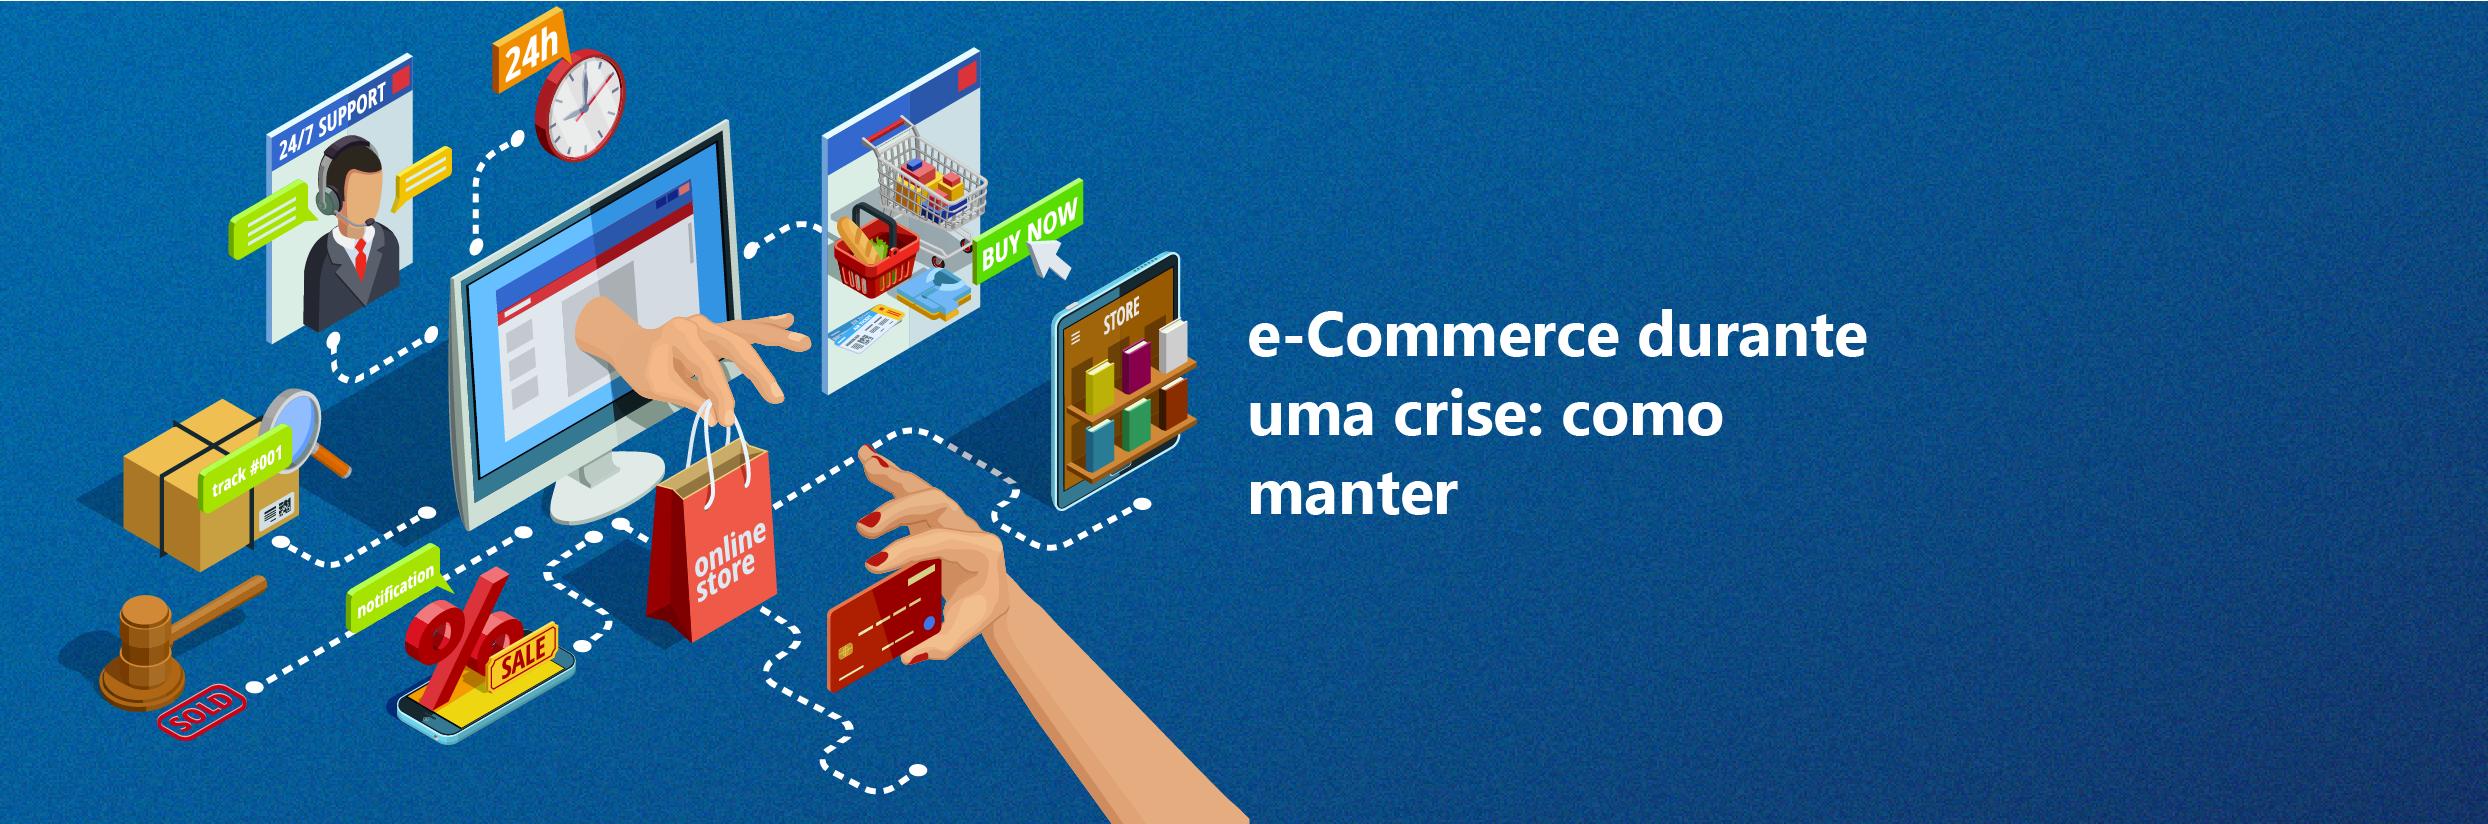 e-Commerce durante uma crise